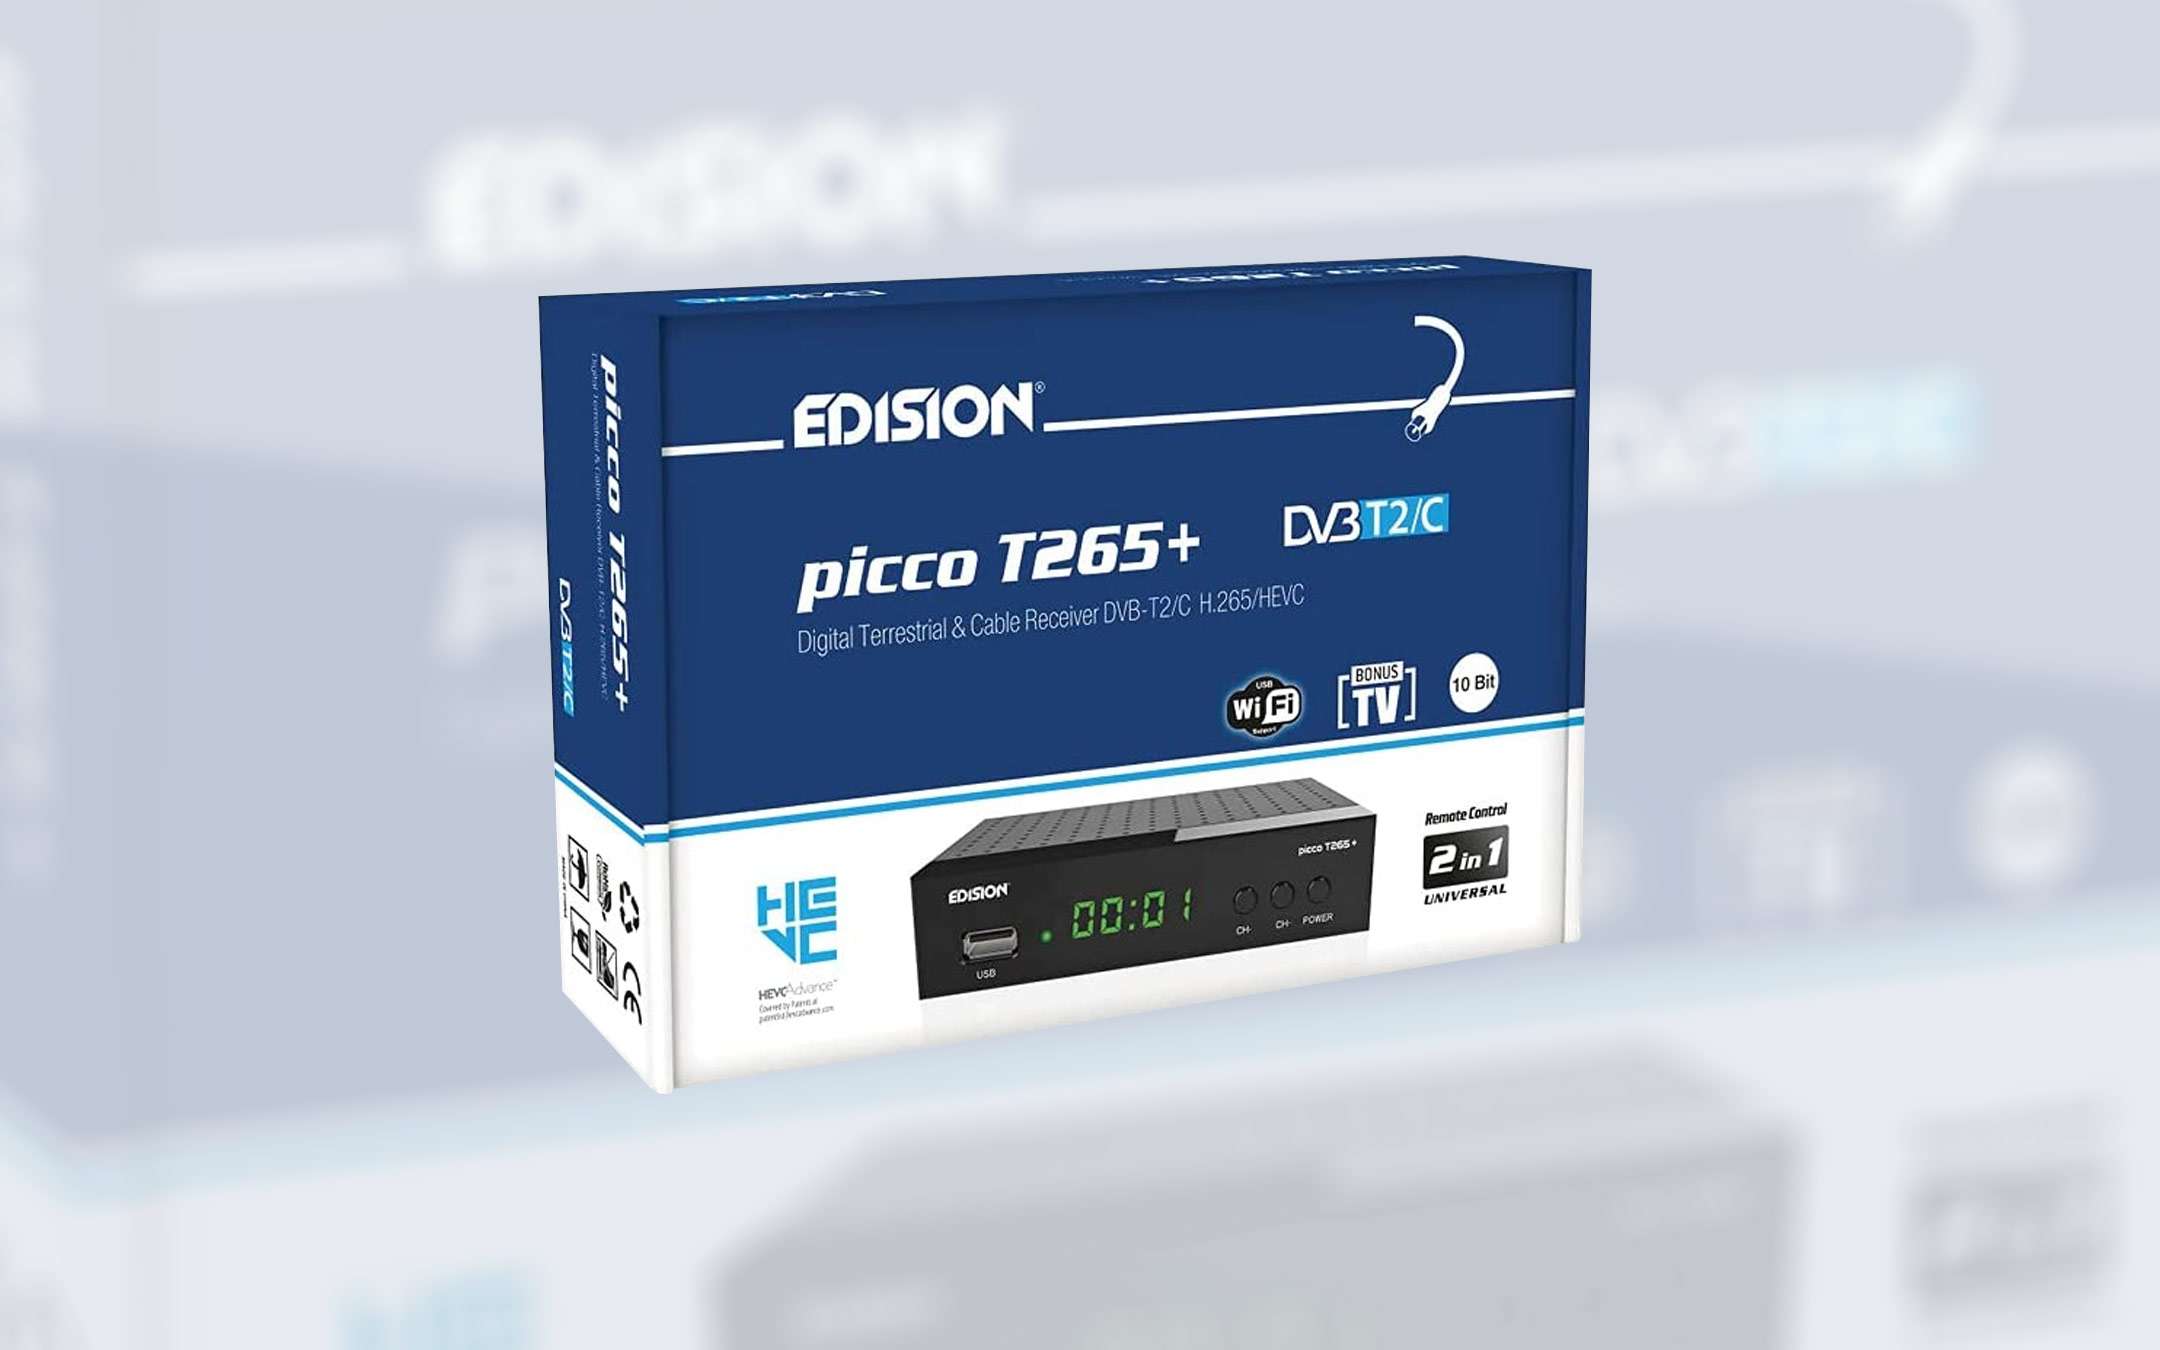 Edision Picco T265 Receptor digital terrestre FullHD DVB-T2 H265 HEVC 10 Bit